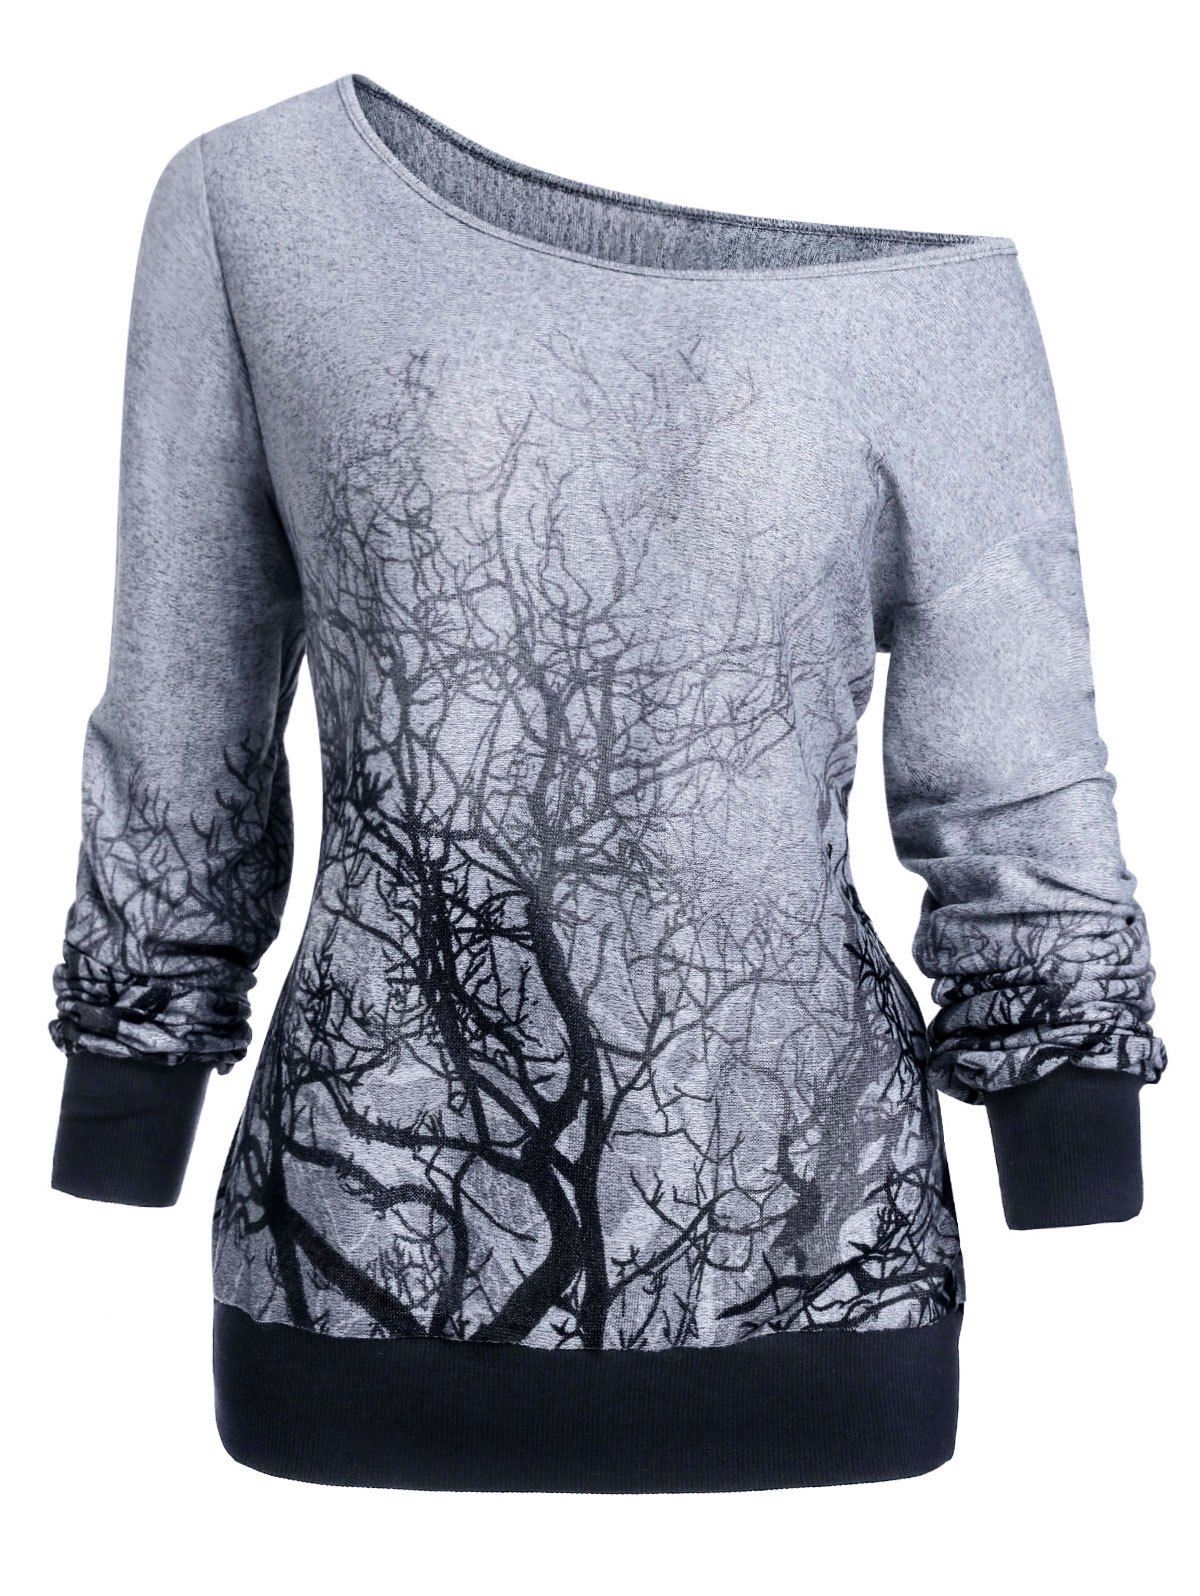 Halloween Skew Neck 3D Tree Print Sweatshirt - GRAY L